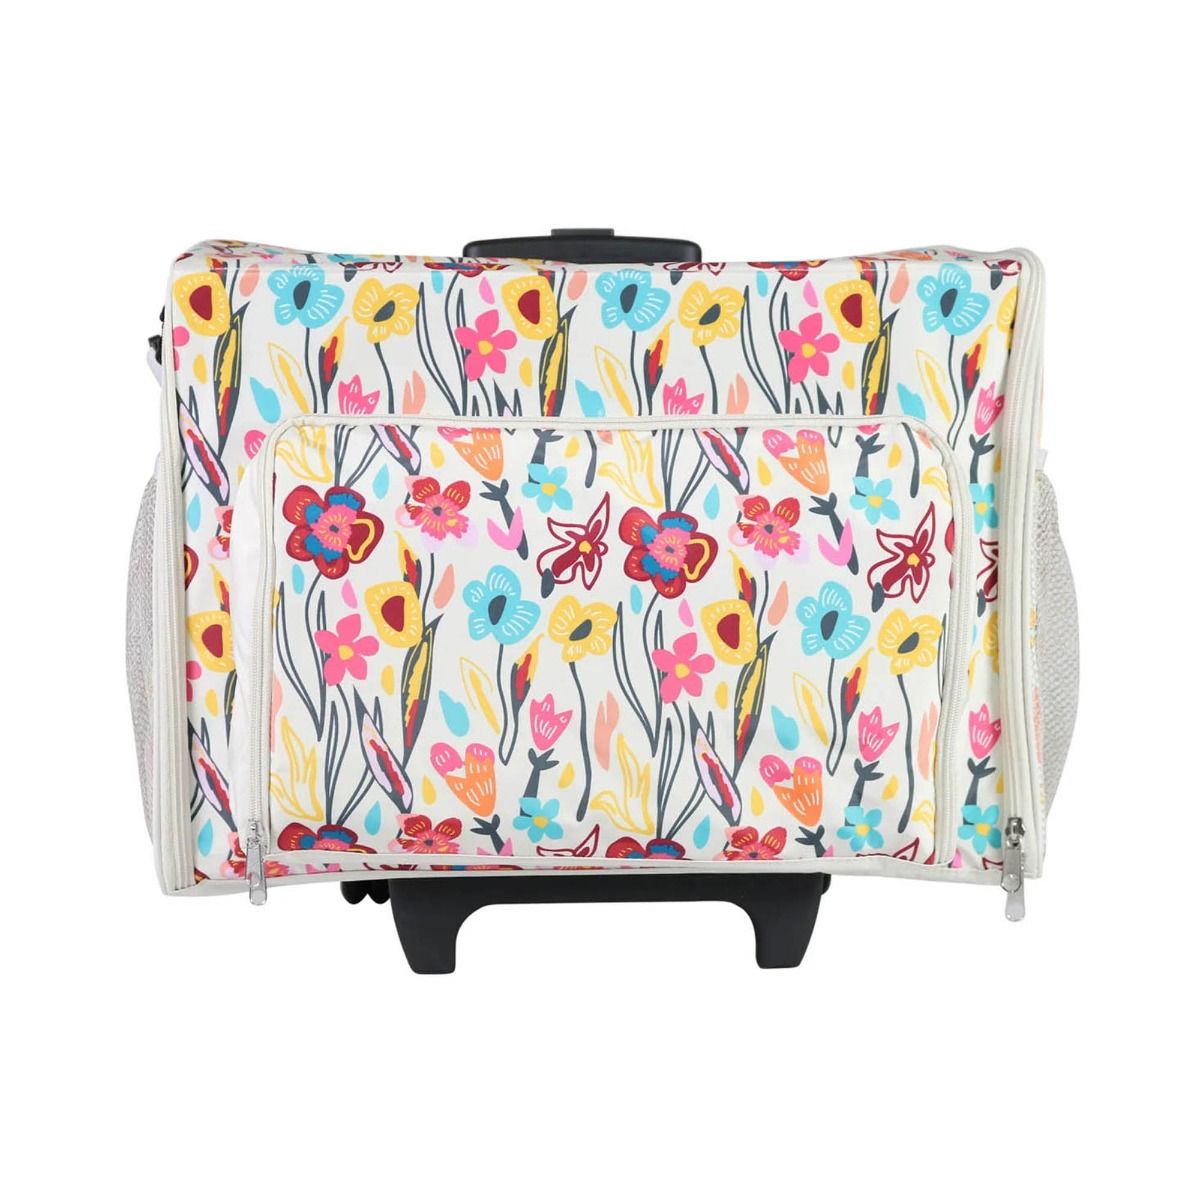 Buy Craft Trolley Bag on Wheels, Cream and Multi Floral -50x25x35cm